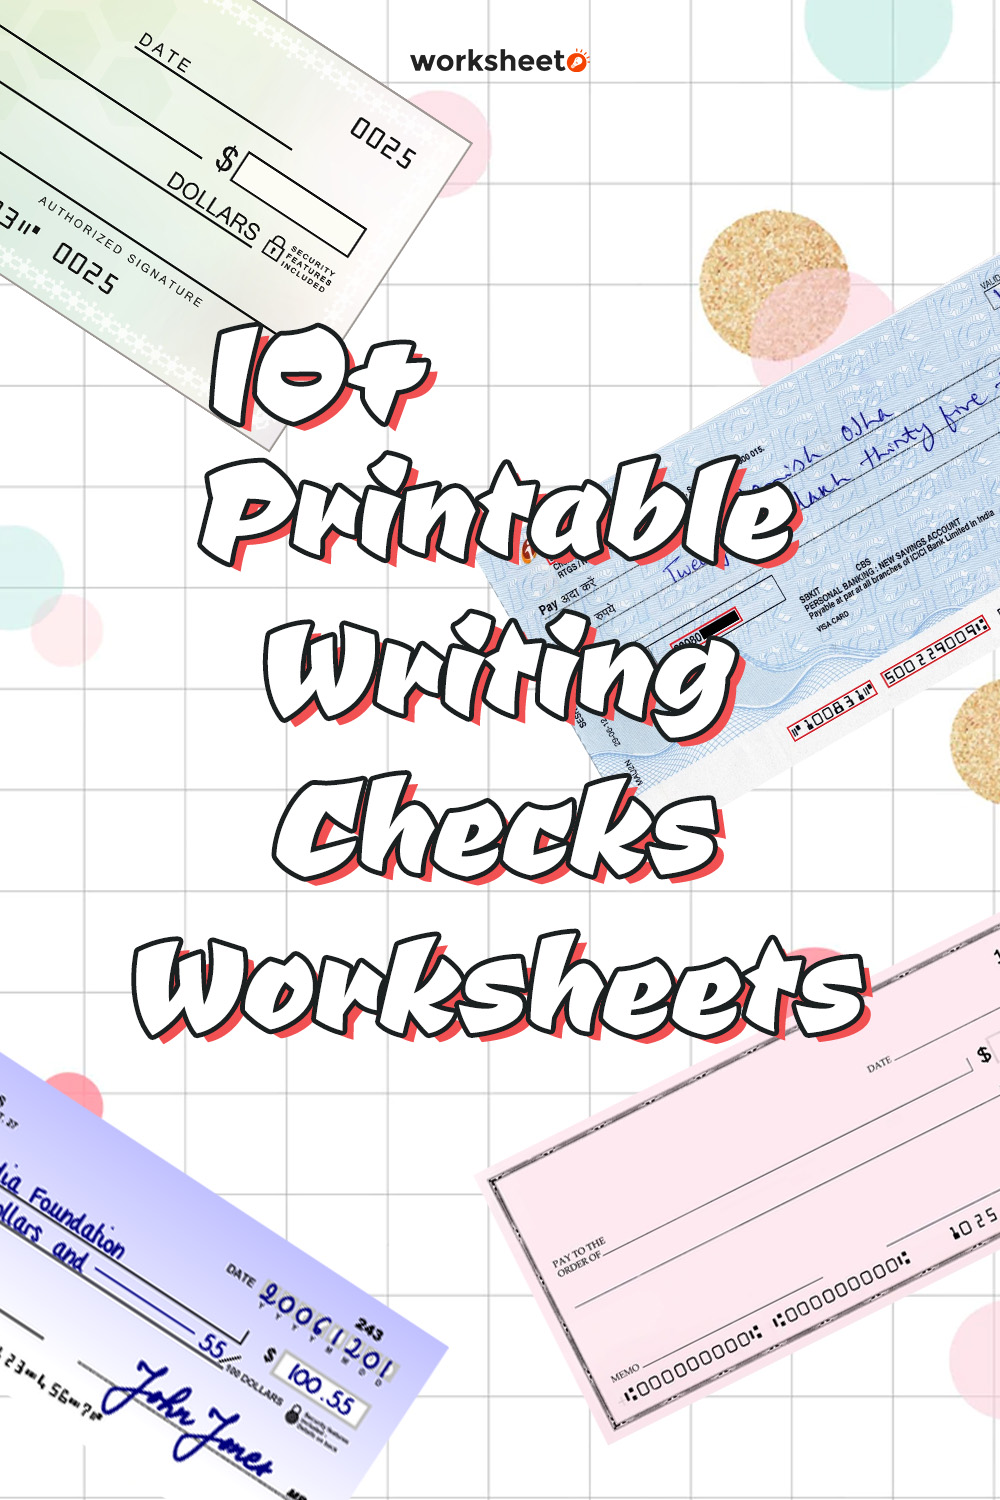 9 Images of Printable Writing Checks Worksheets